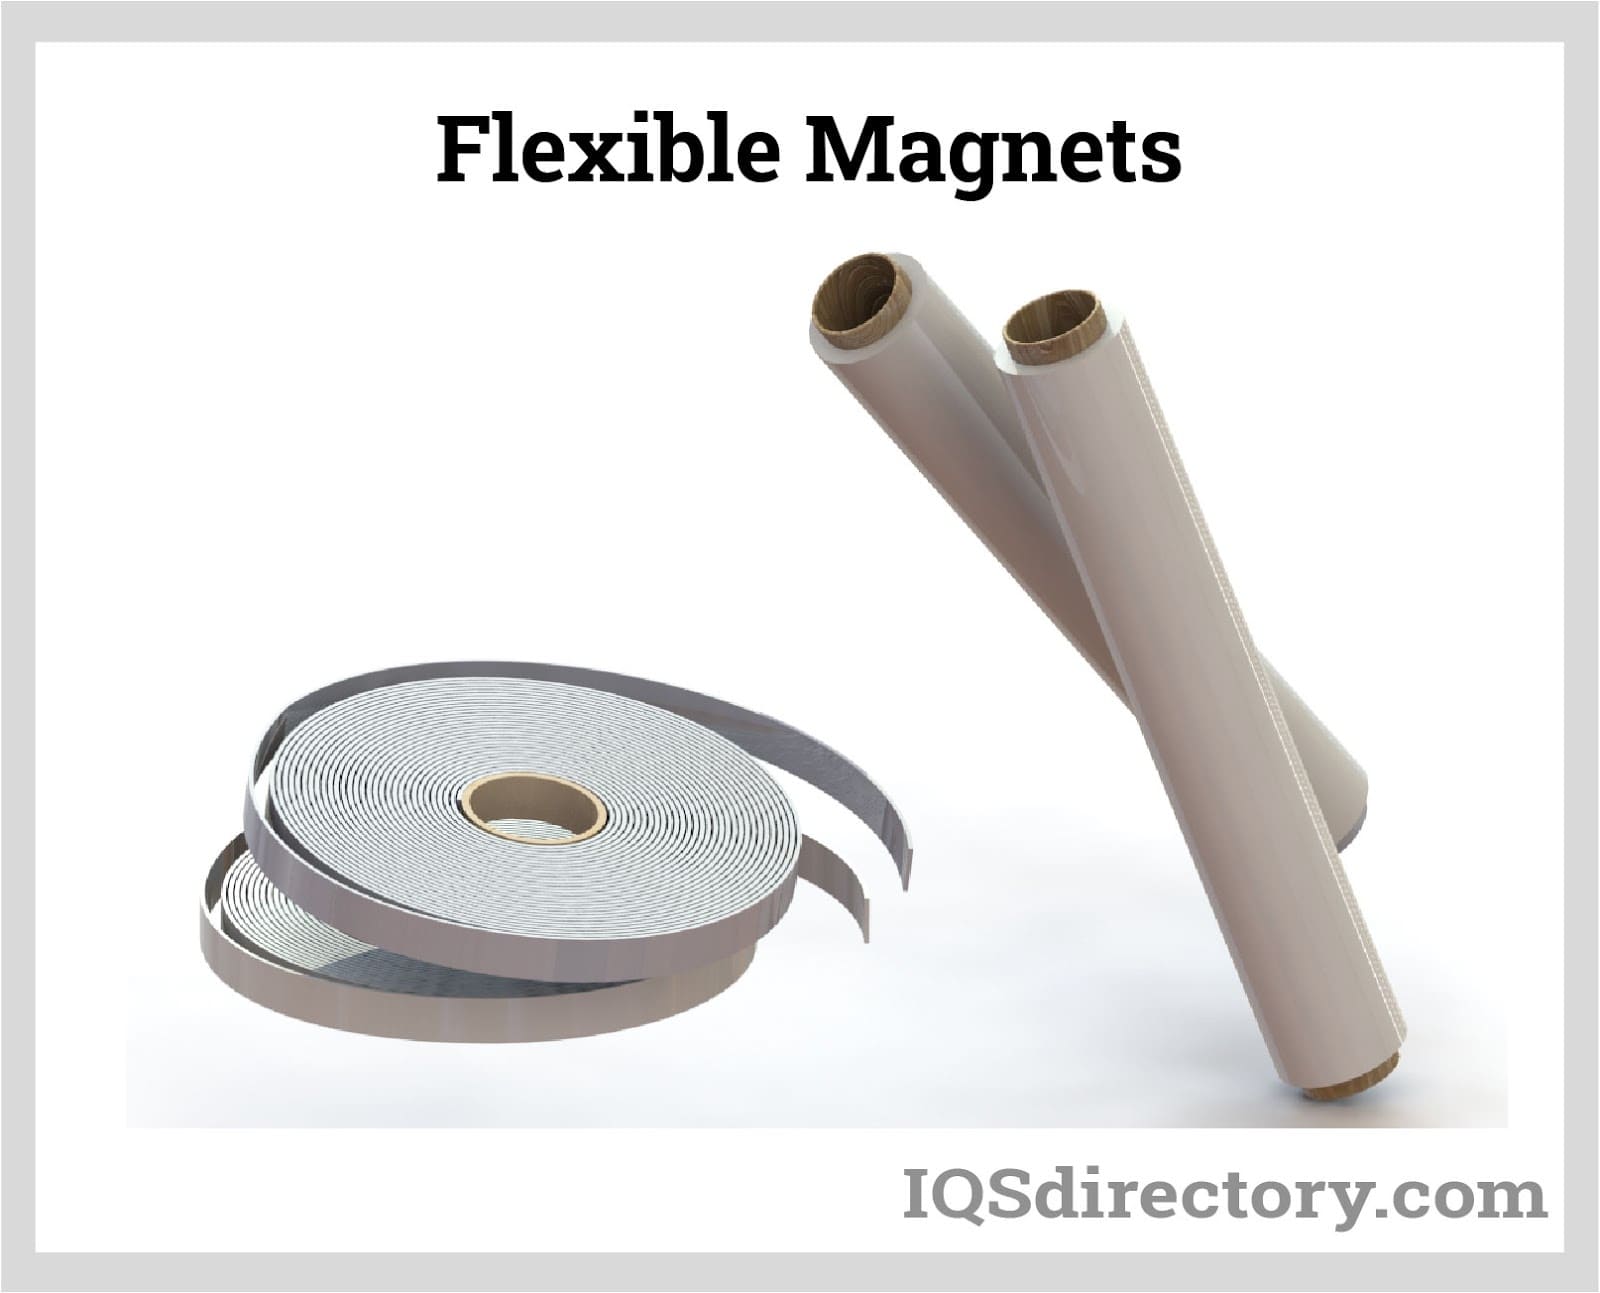 https://www.iqsdirectory.com/articles/magnet/flexible-magnets/flexible-magnets.jpg